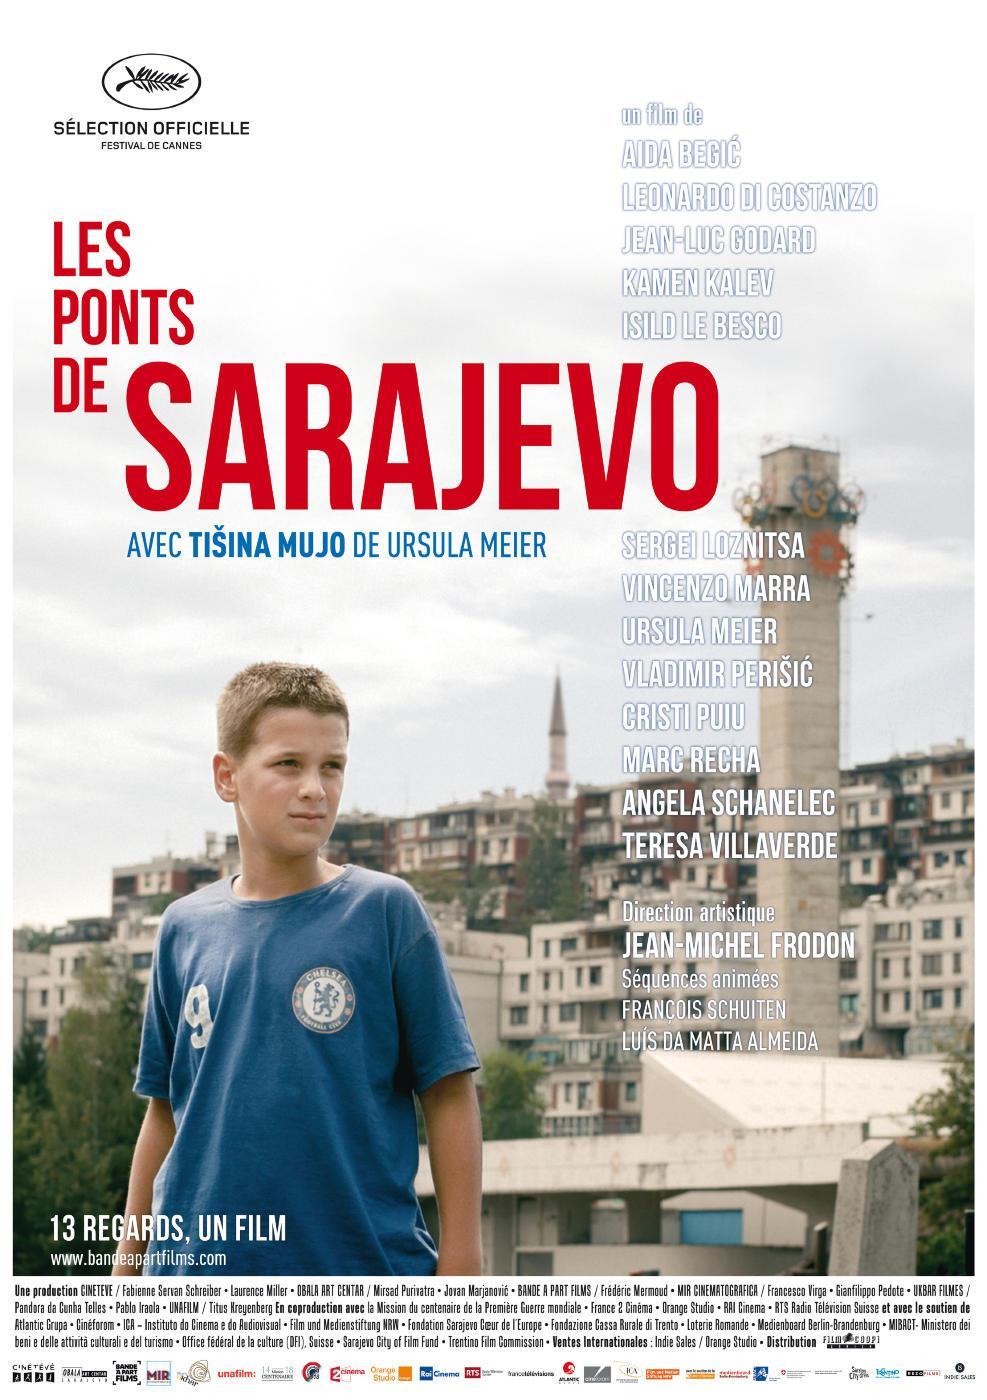 Постер фильма Мосты Сараево | Ponts de Sarajevo